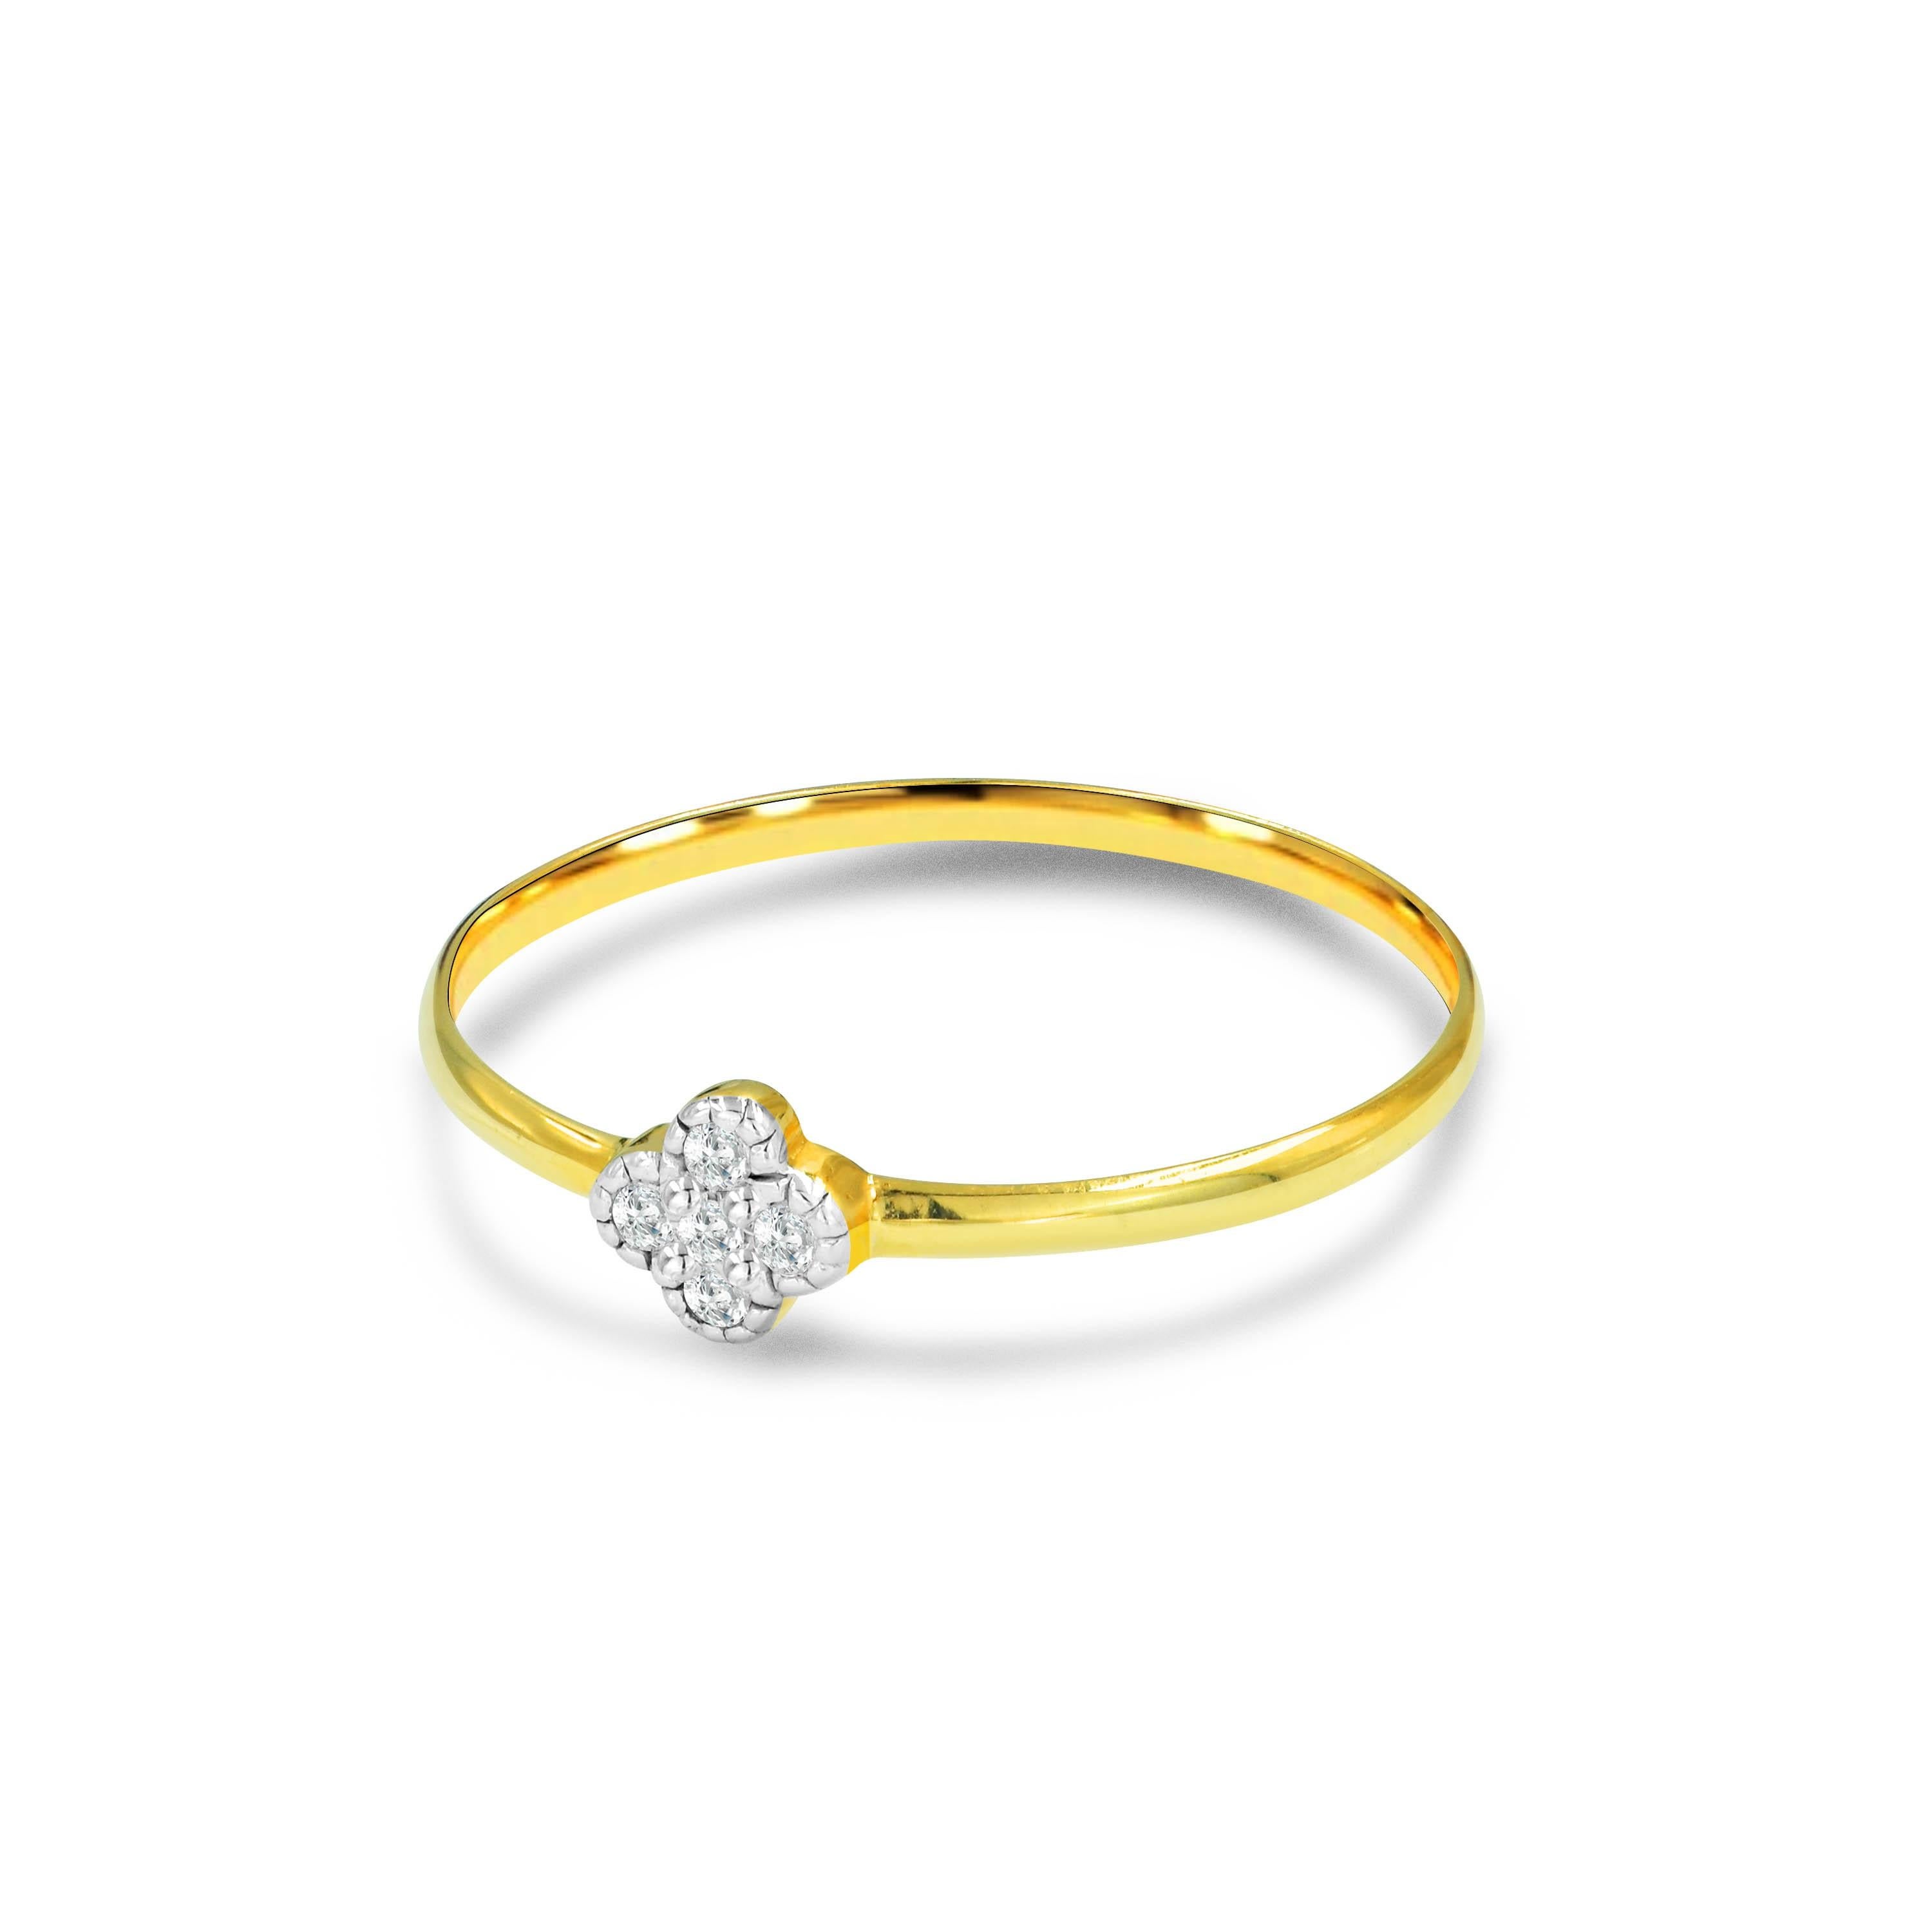 Im Angebot: 14k Gold Kleeblatt-Ring Dainty Minimalistischer Diamantring, stapelbar () 5